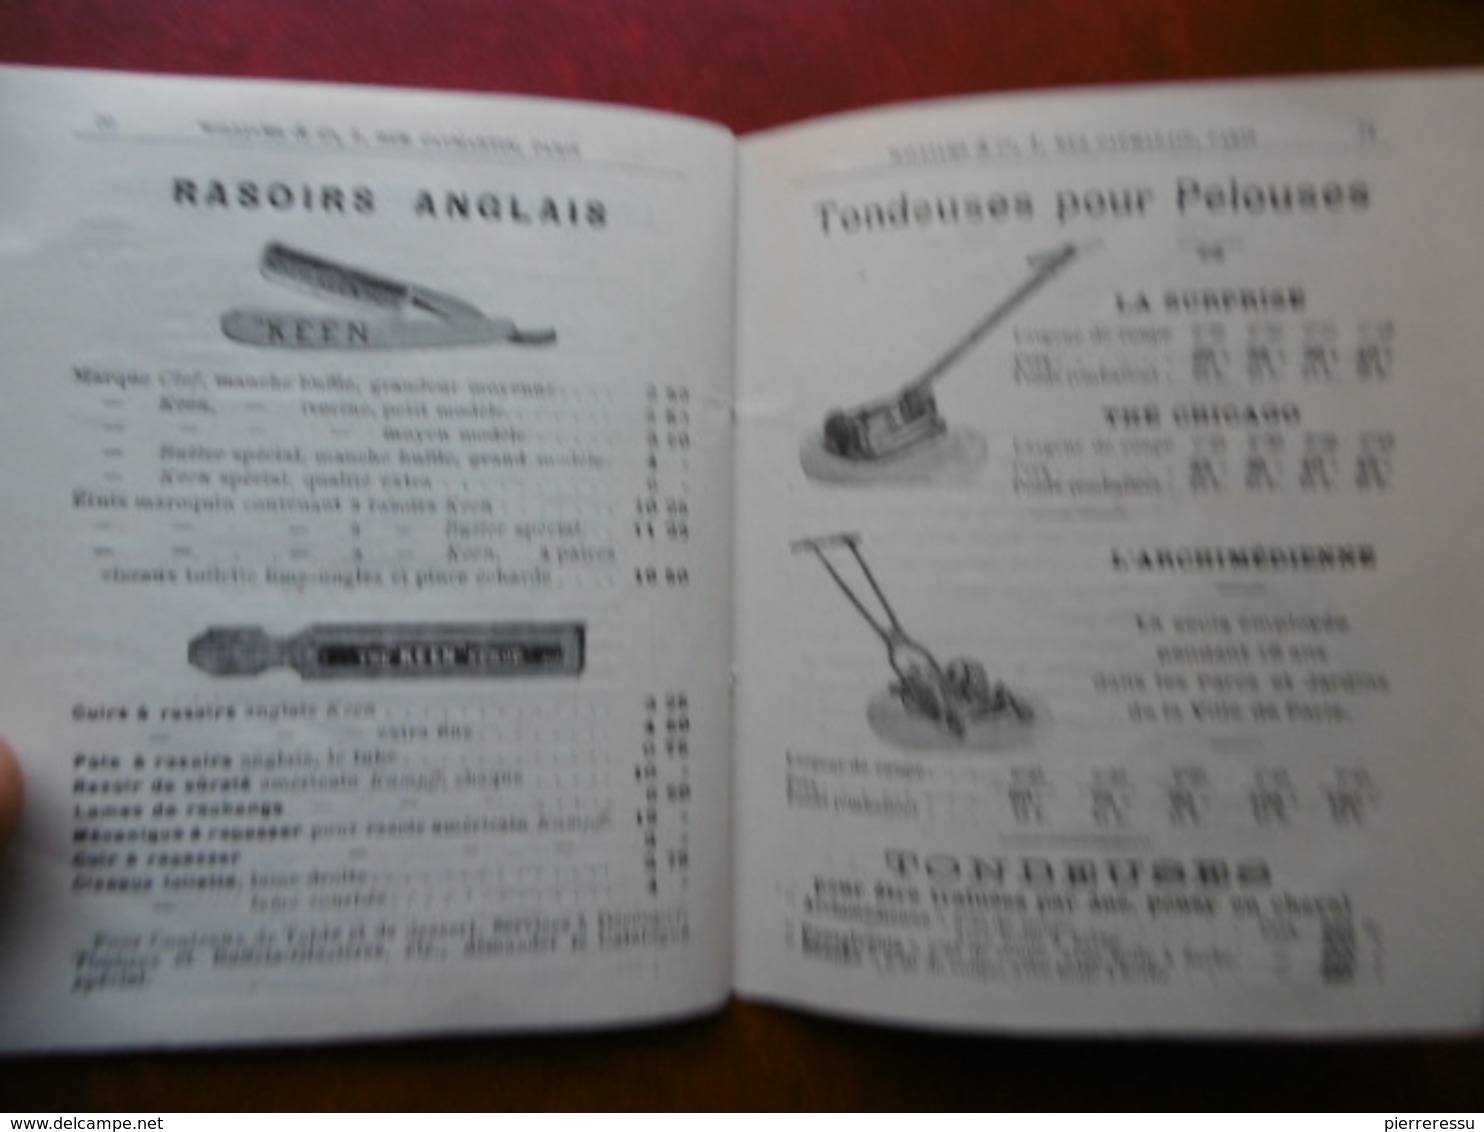 SPORT TENNIS CROQUET BADMINTON CRICKET FOOTBALL POLO LACROSSE BOXING WILLIAMS & Cie A PARIS 1902